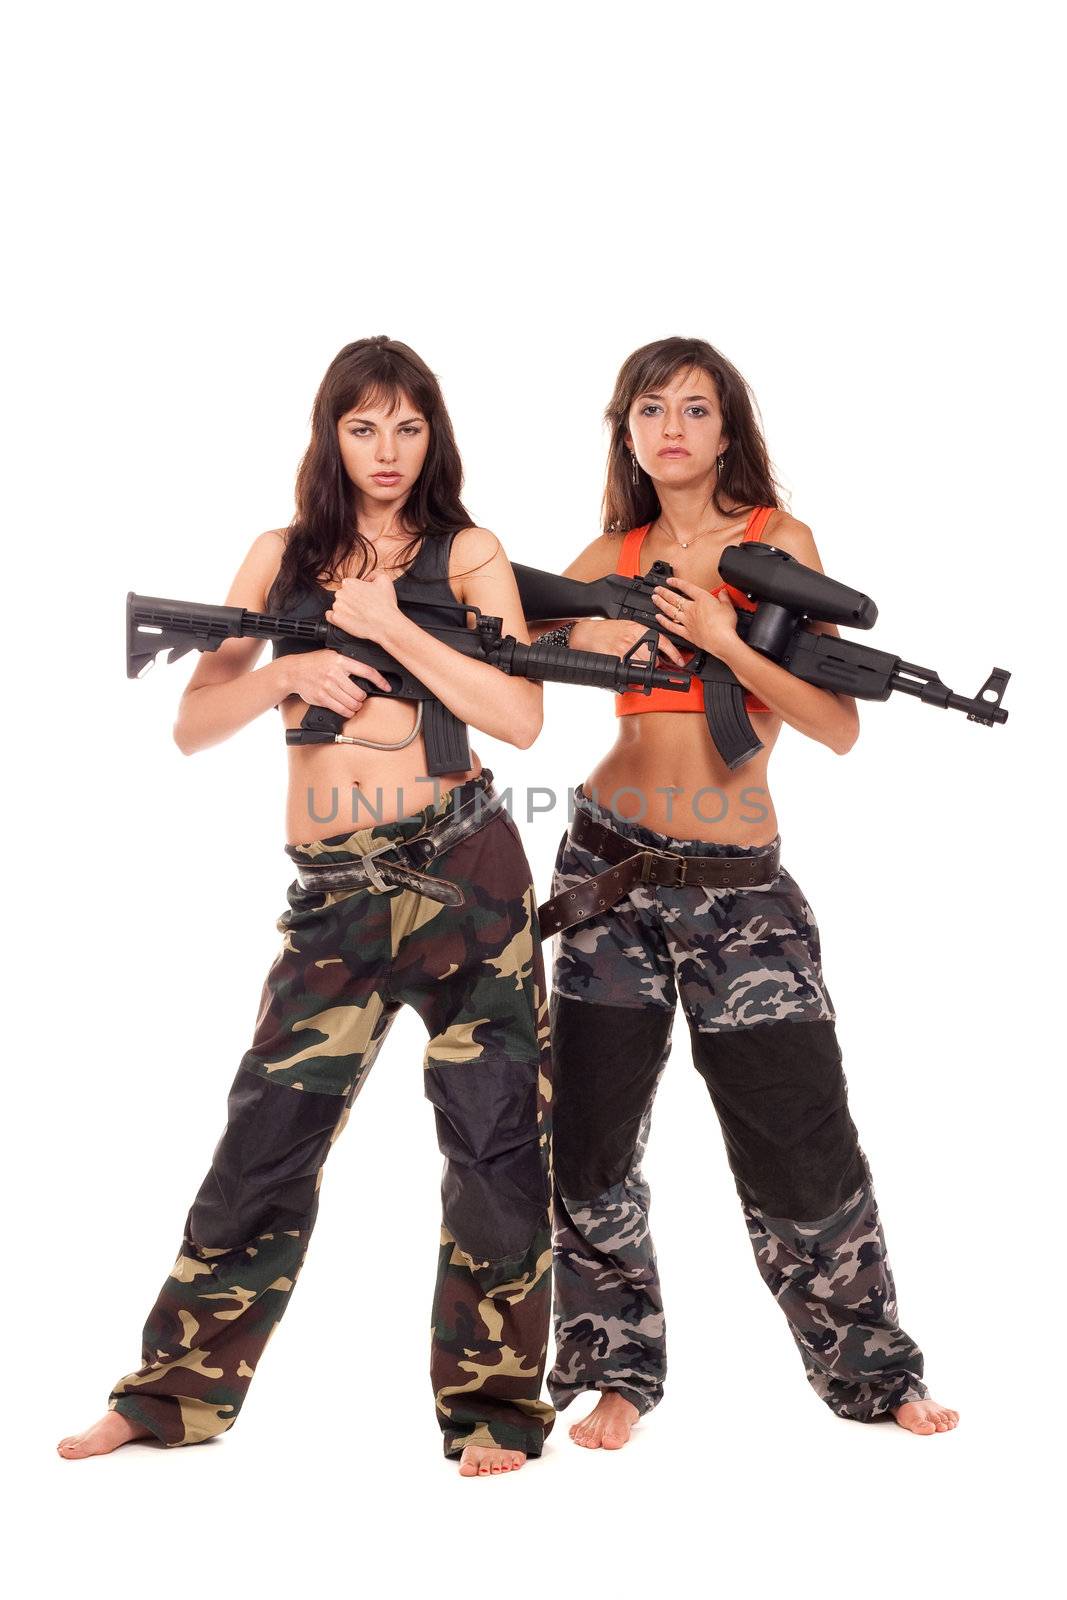 Two armed girls  by igor_stramyk